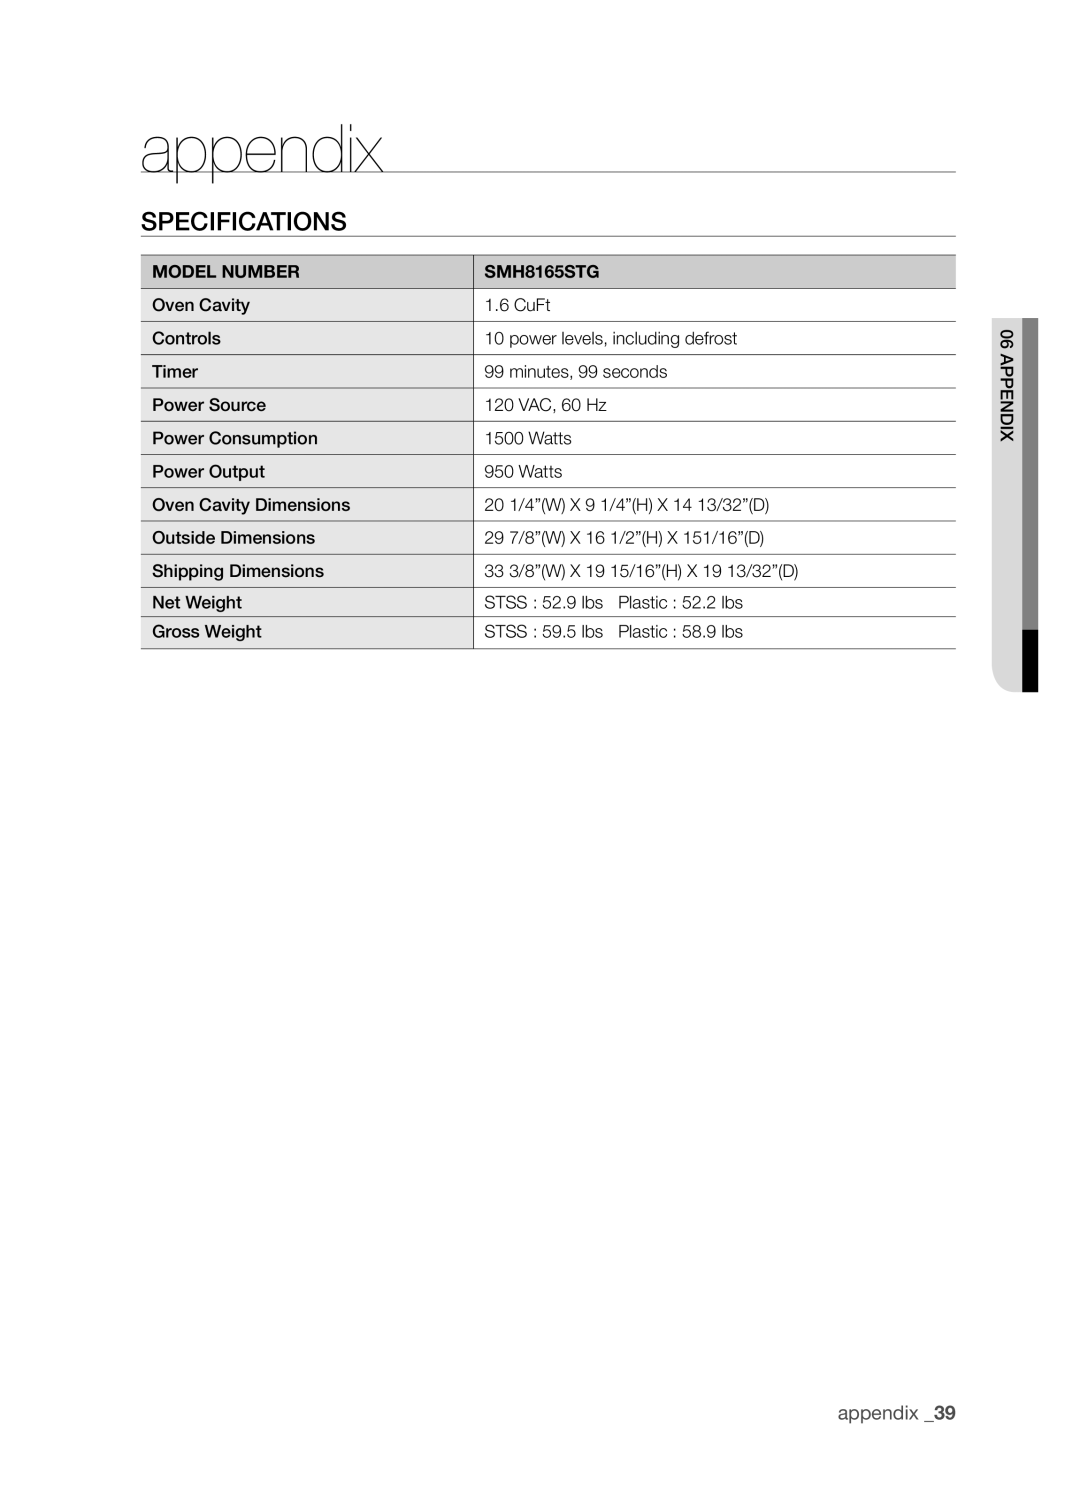 Samsung SMH8165STG user manual appendix, Specifications, Model Number 